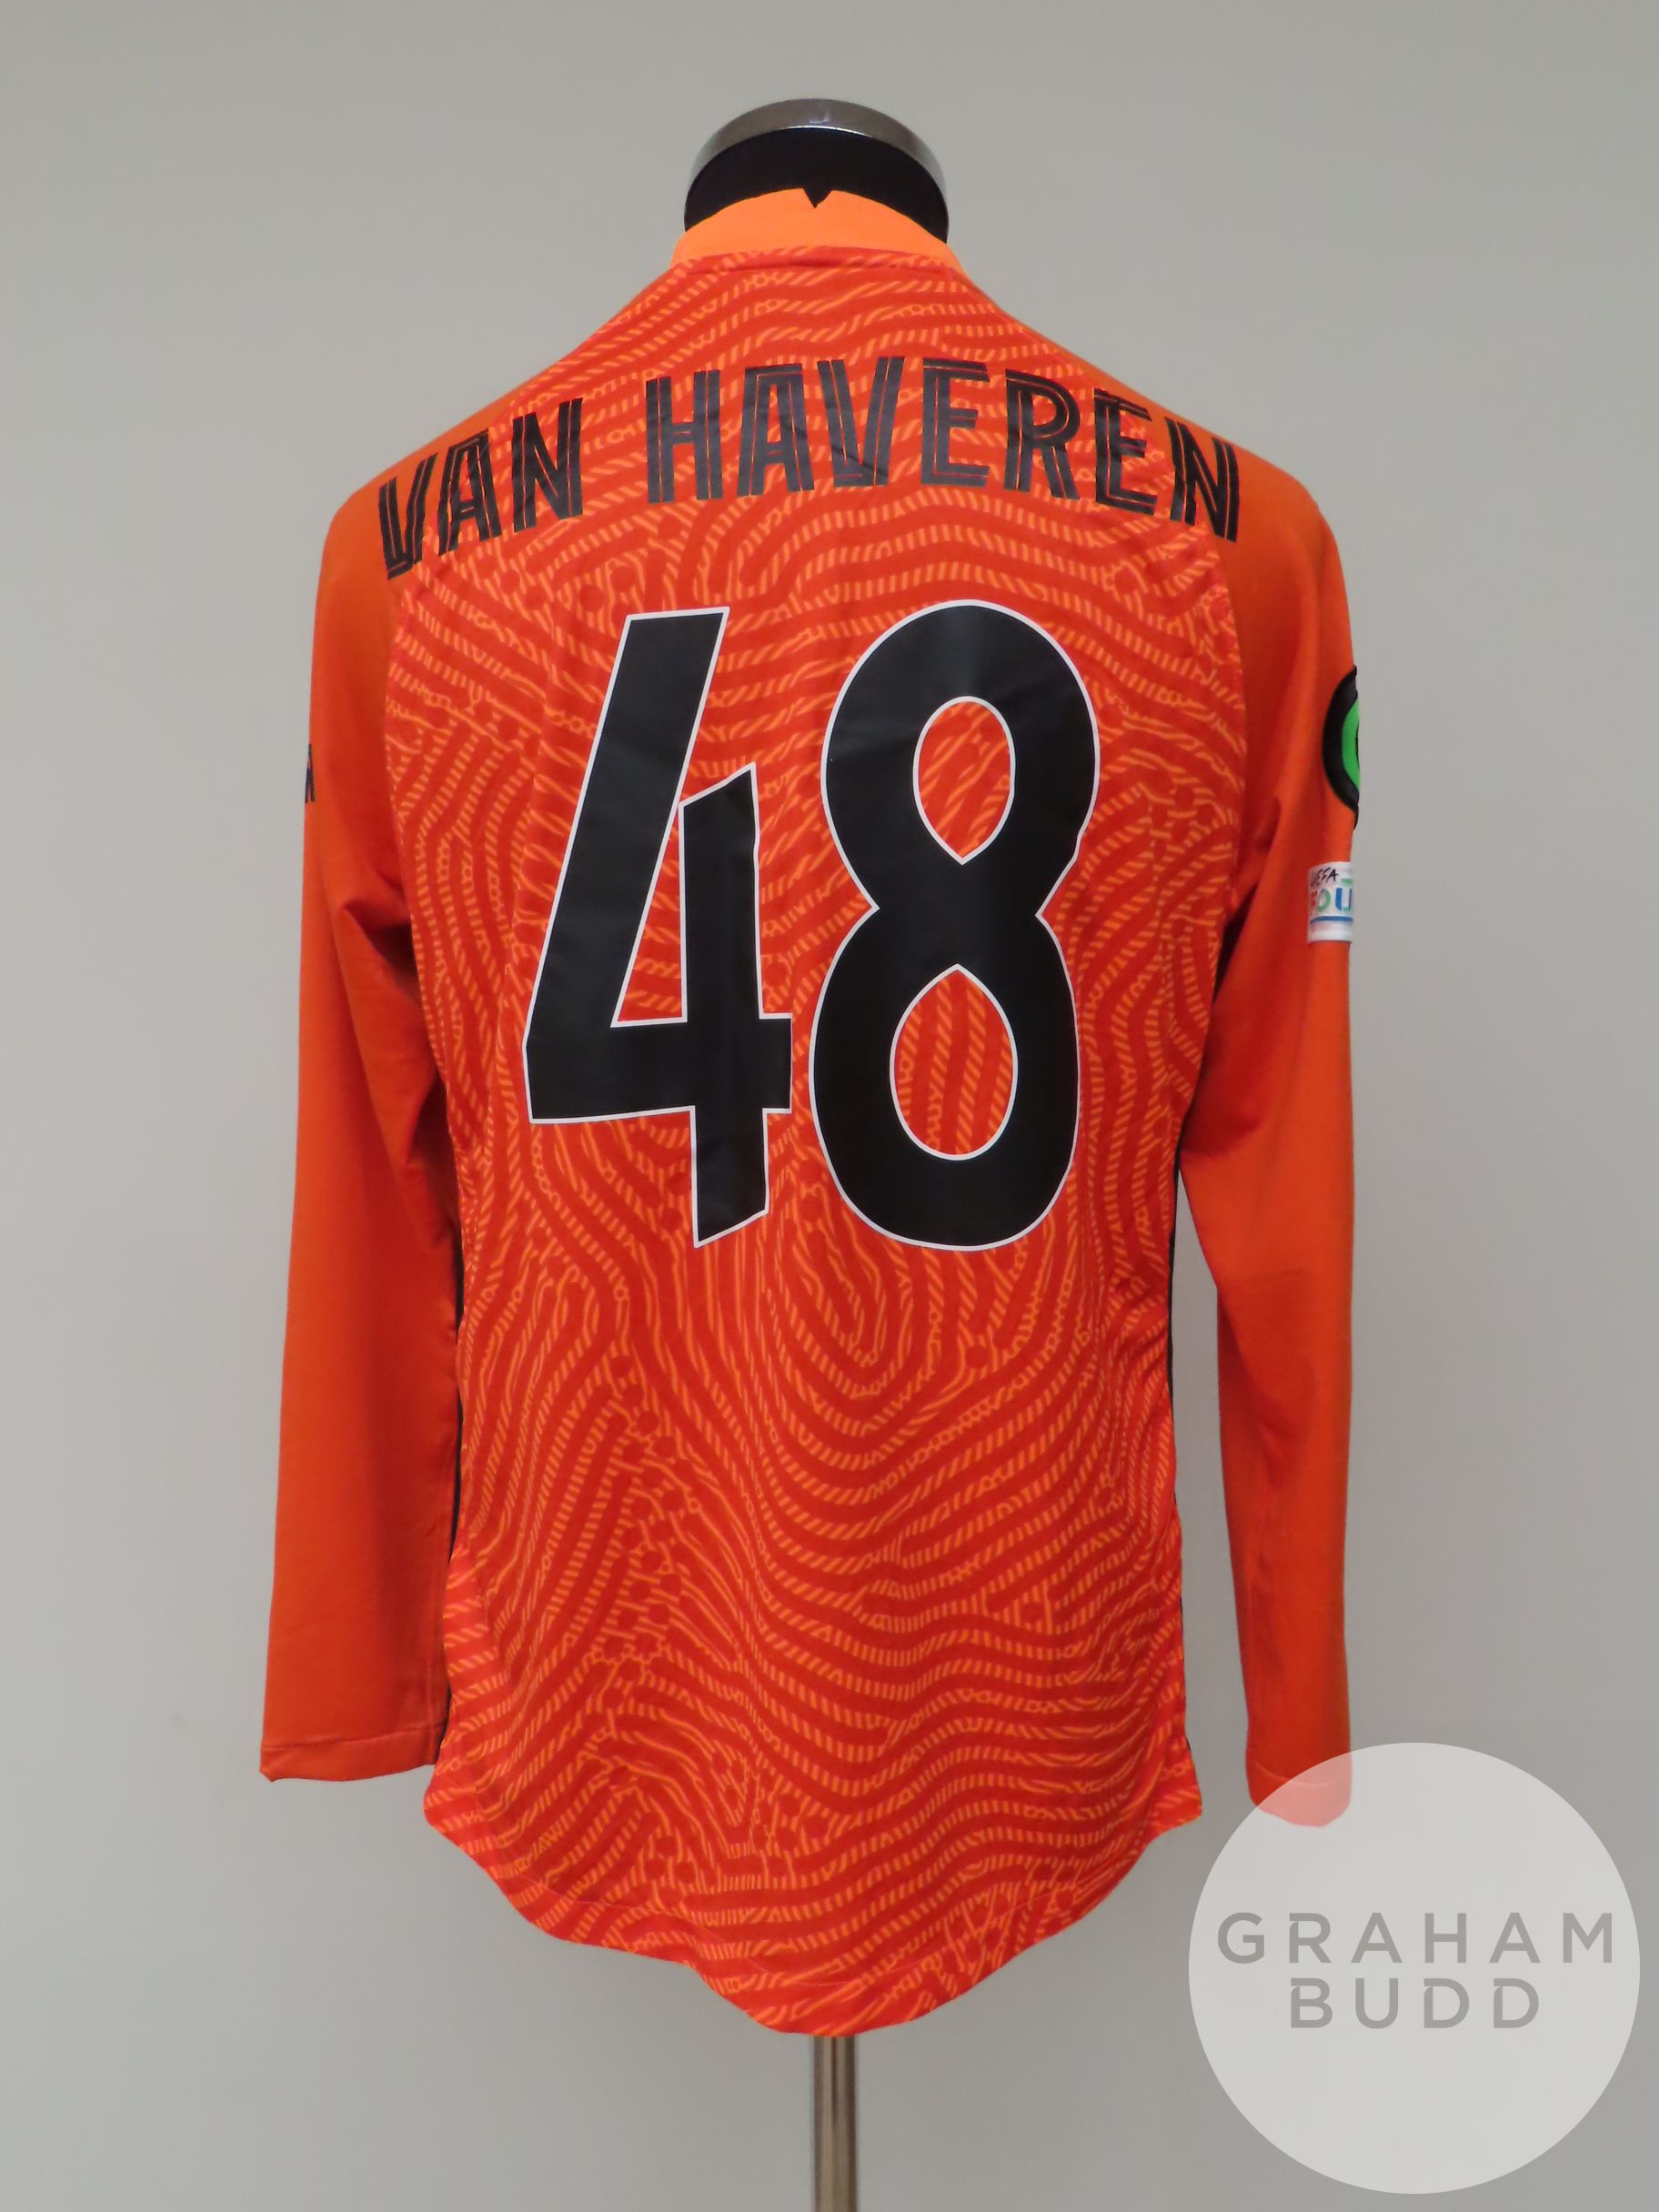 Nigel van Haveren orange Vitesse no.48 goalkeepers shirt, 2021-22, - Image 2 of 2